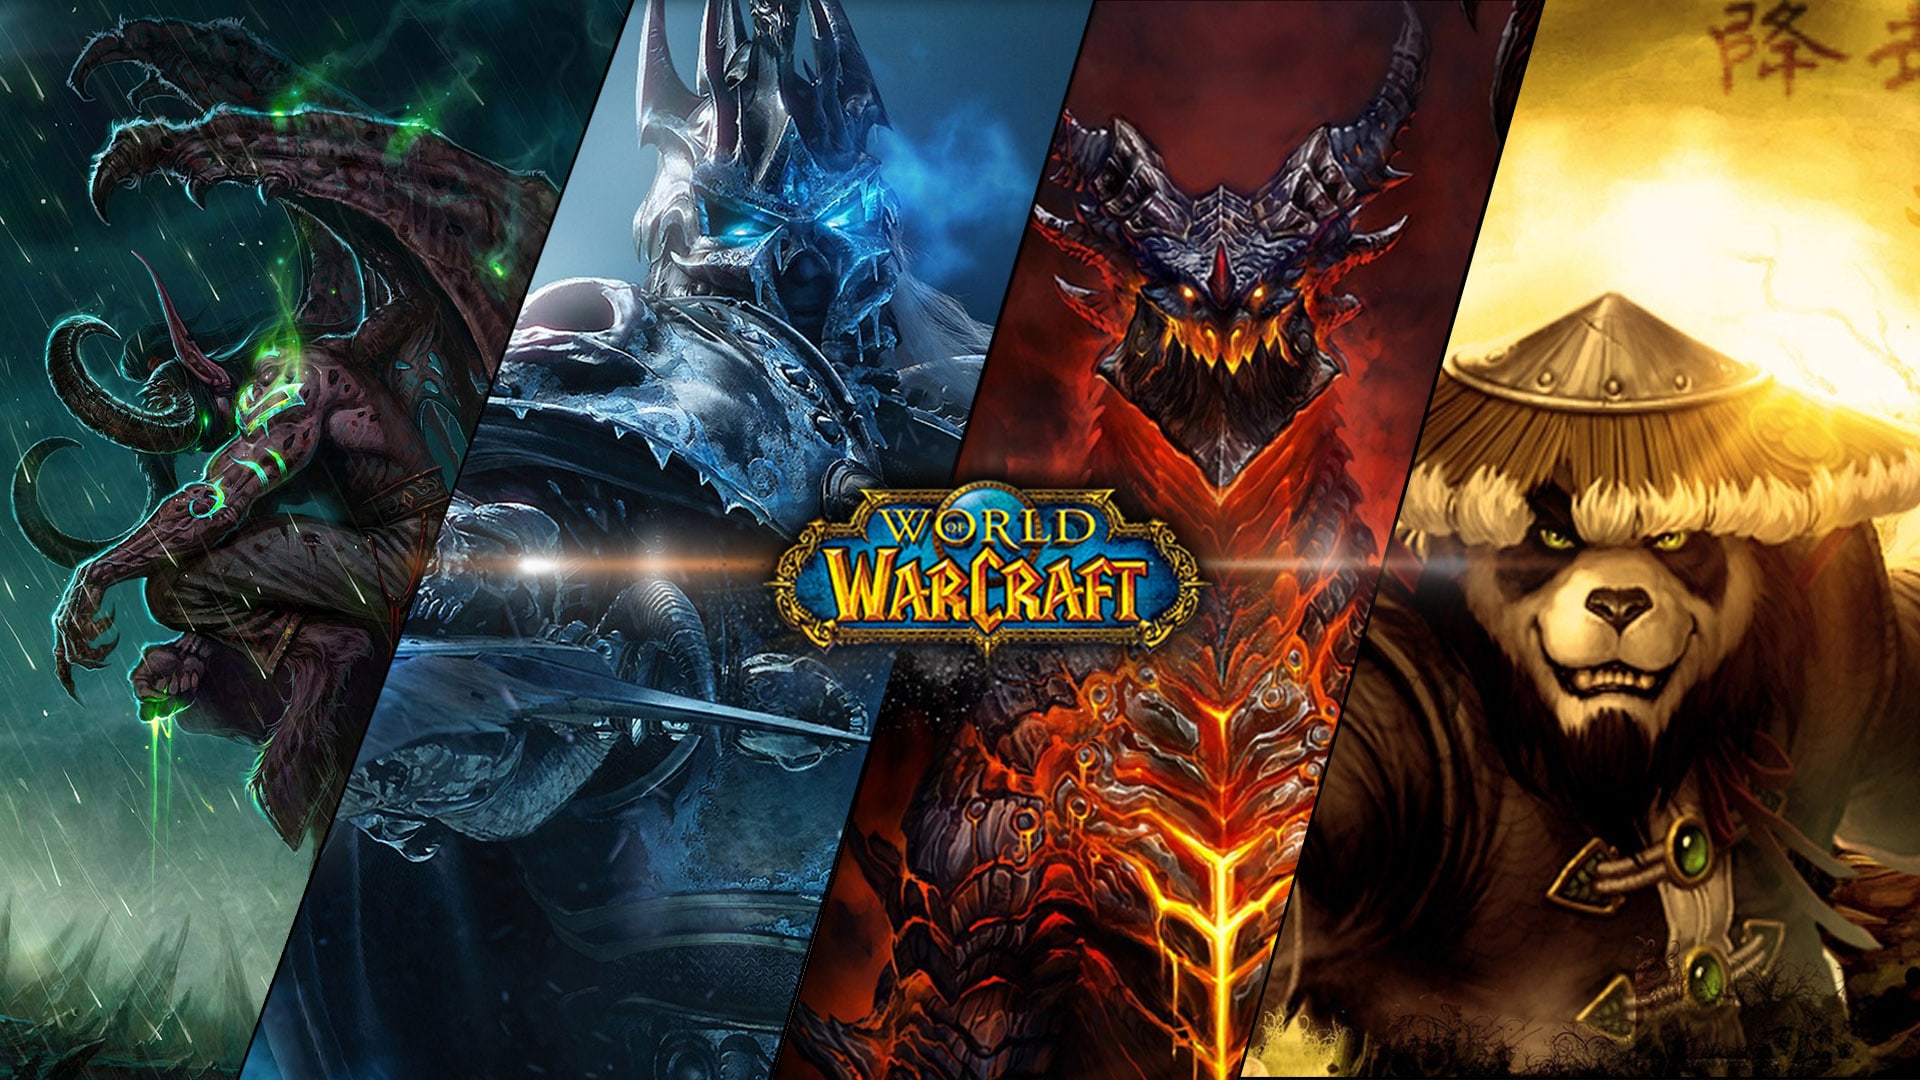 World of Warcraft Poster